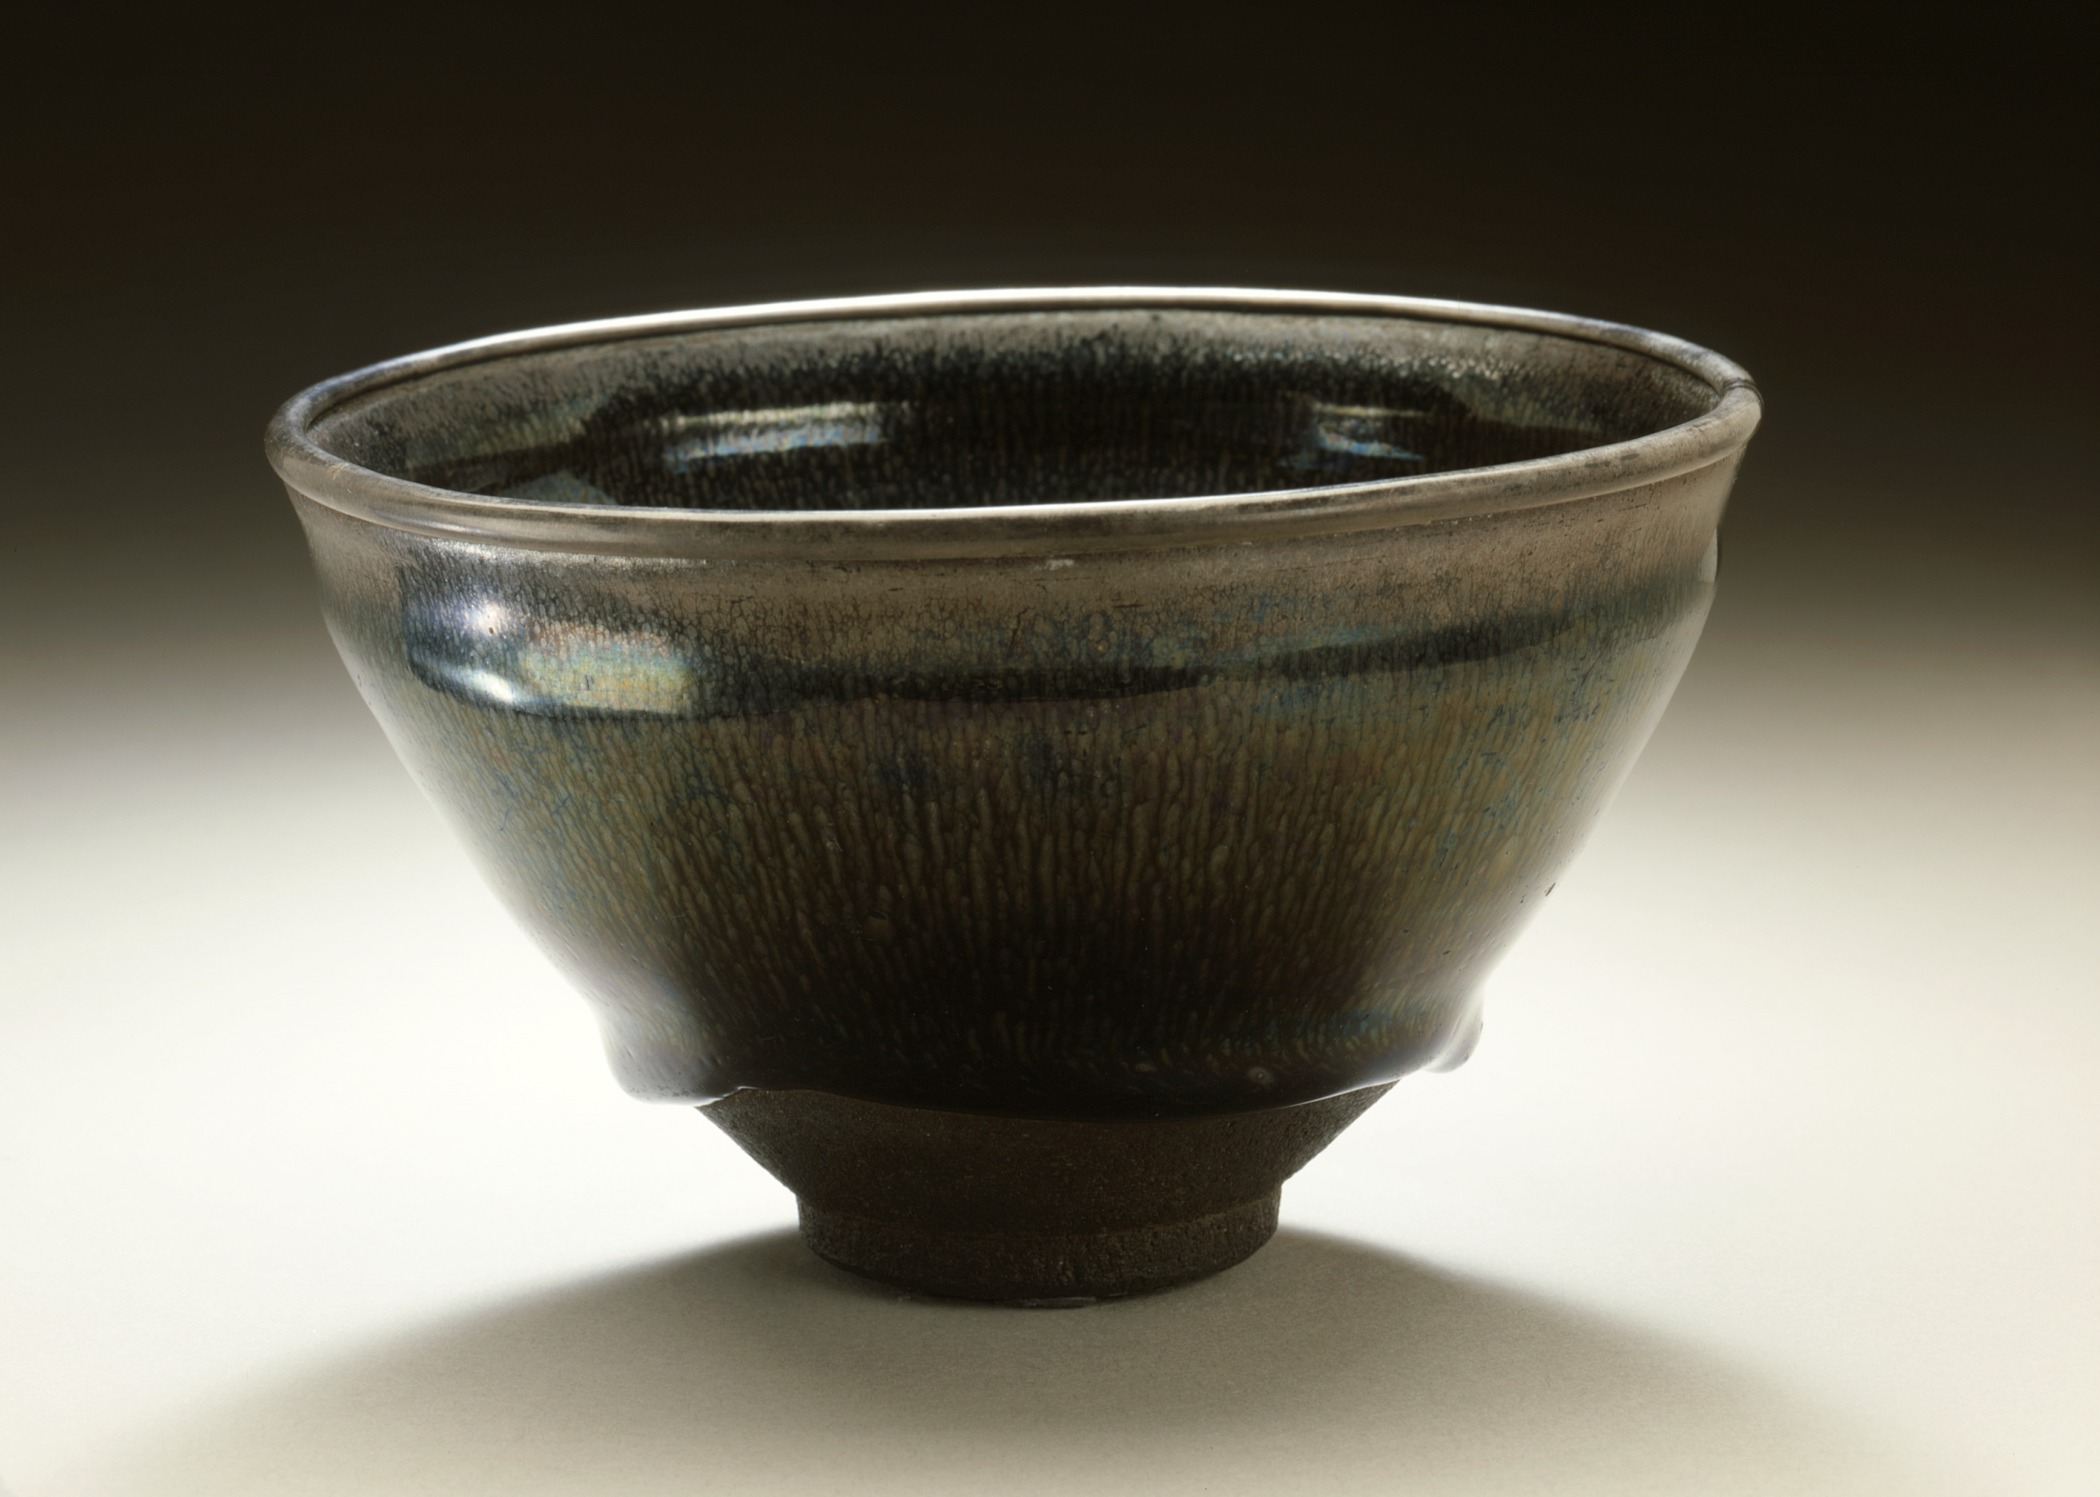 VIOY Handmade Stoneware tea set Tea bowl Matcha bowl Tea cup Tea bucket Accessories,gray,One size 